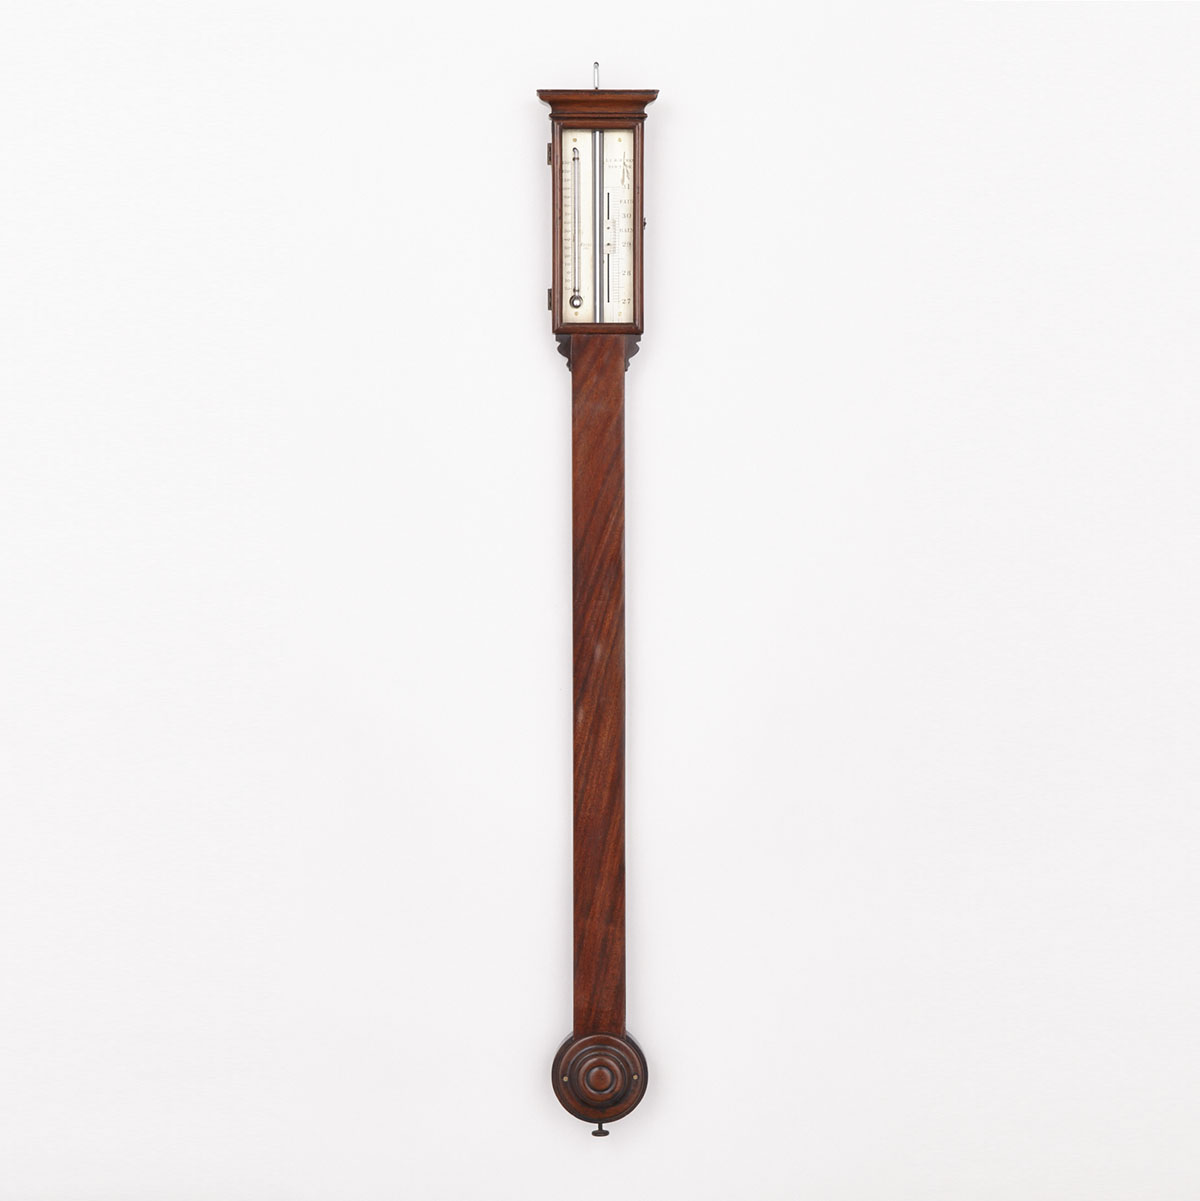 American Rosewood Stick Barometer, L. C. Hoffman, New York, N.Y., c.1860